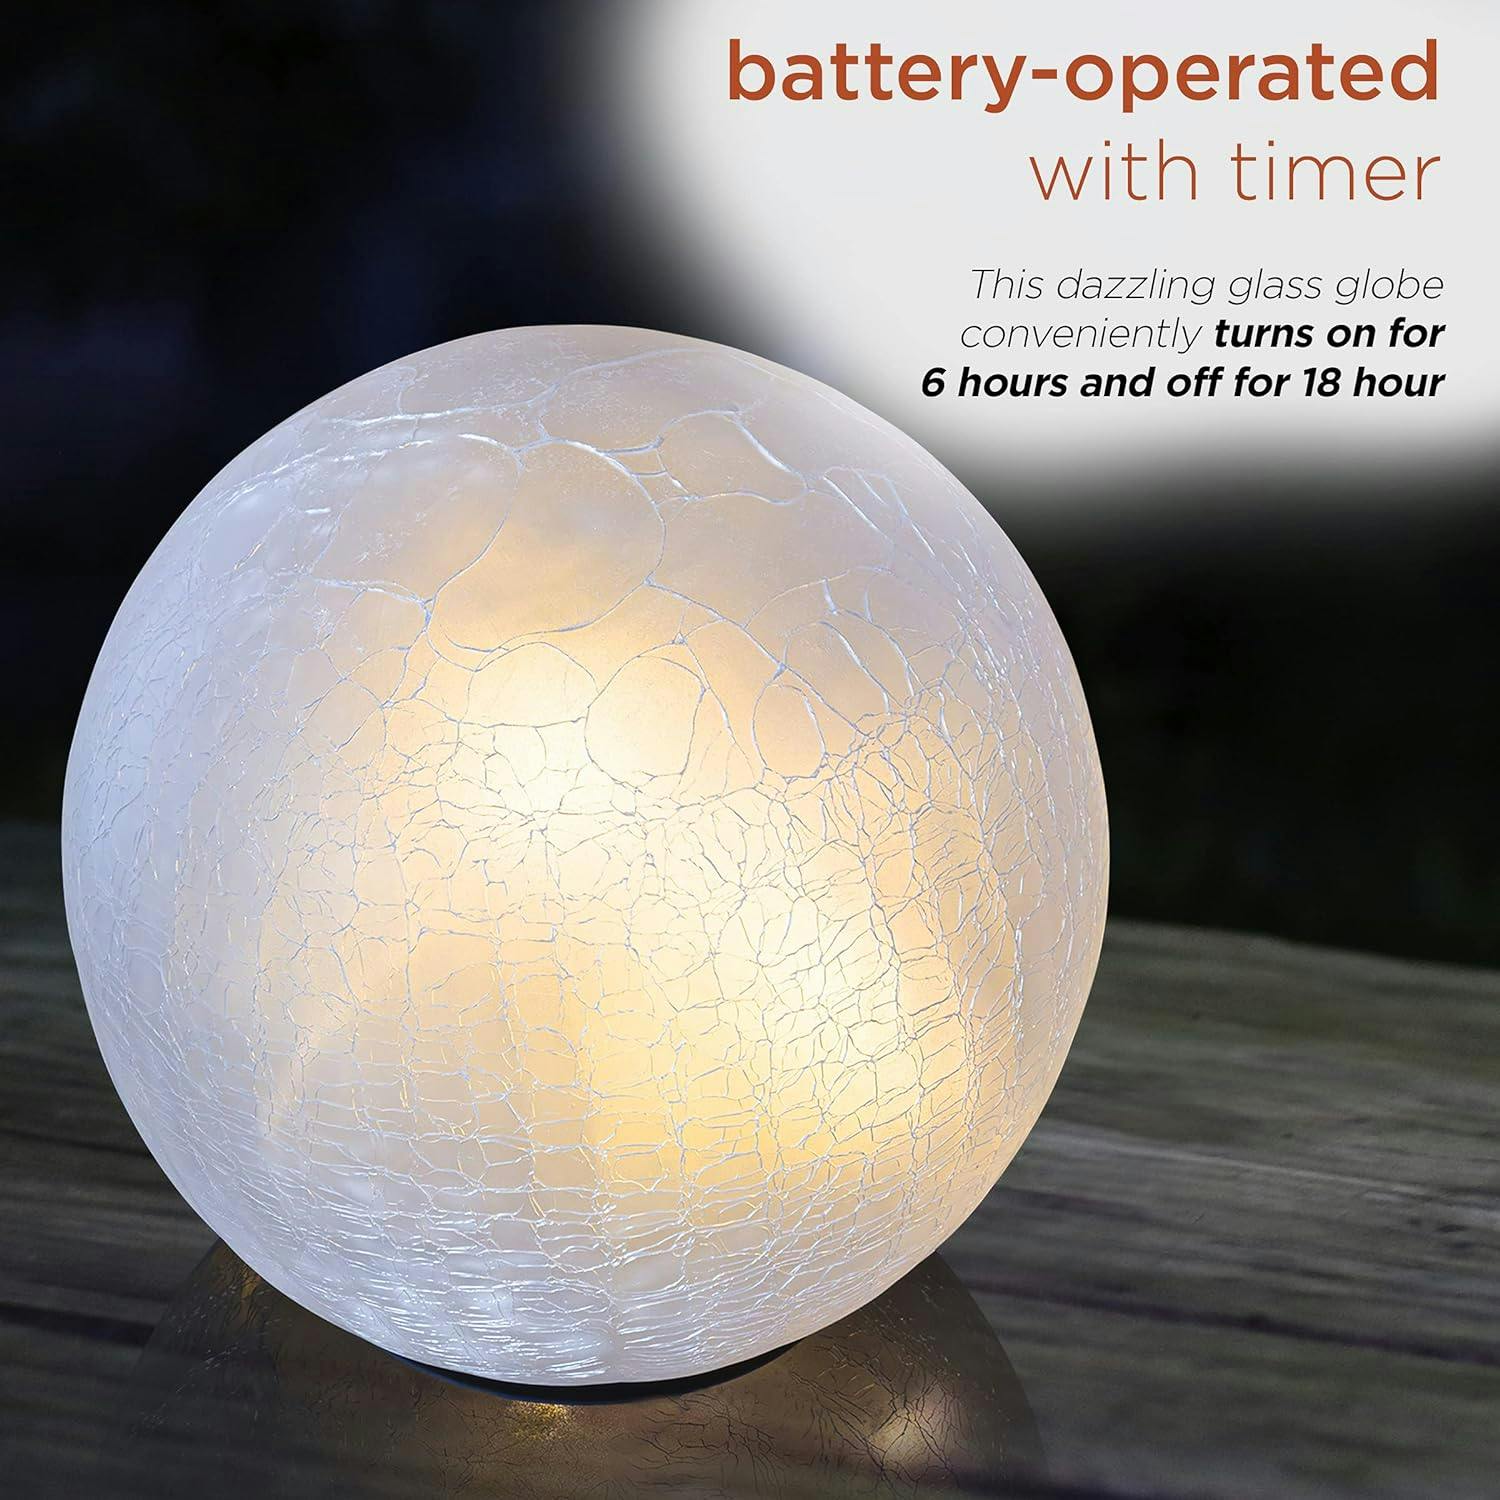 Luminous 7" White Glass LED Gazing Globe for Indoor/Outdoor Decor